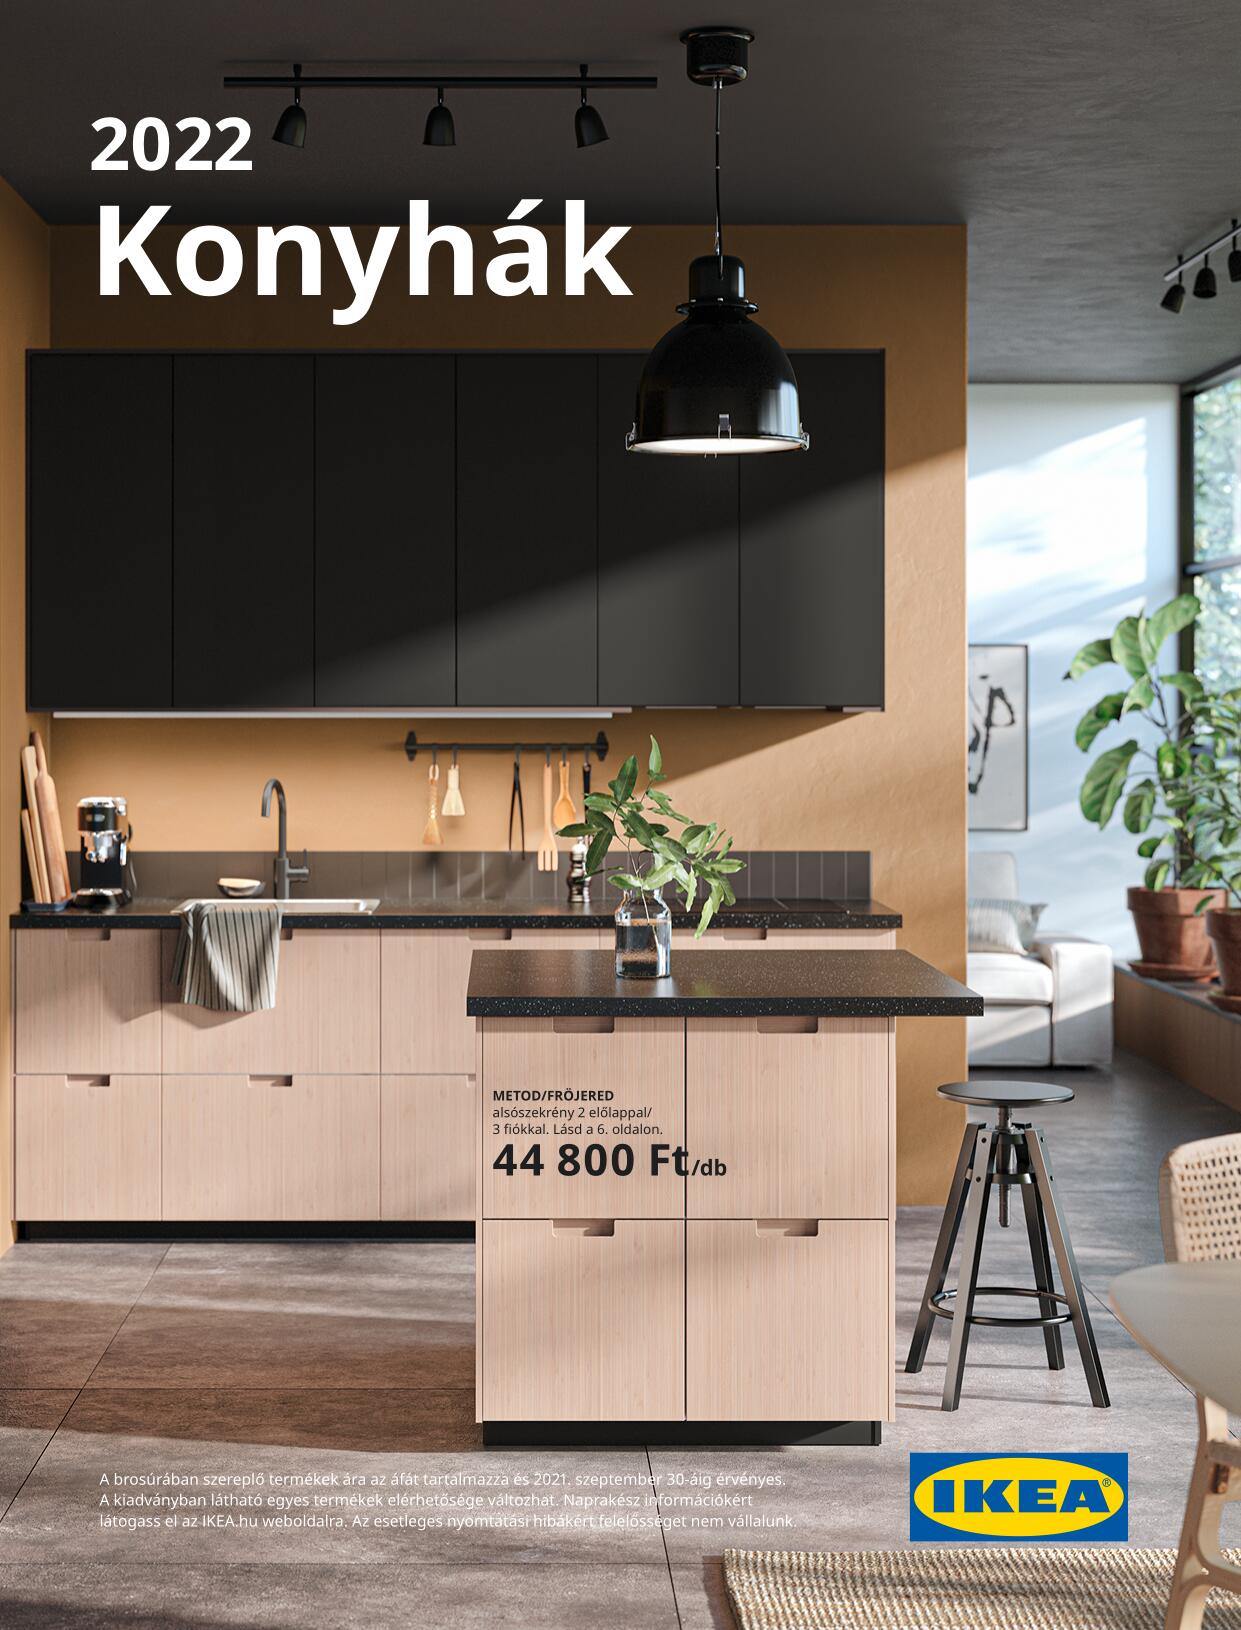 IKEA-Hungary-Hungarian-Konyhak-2022